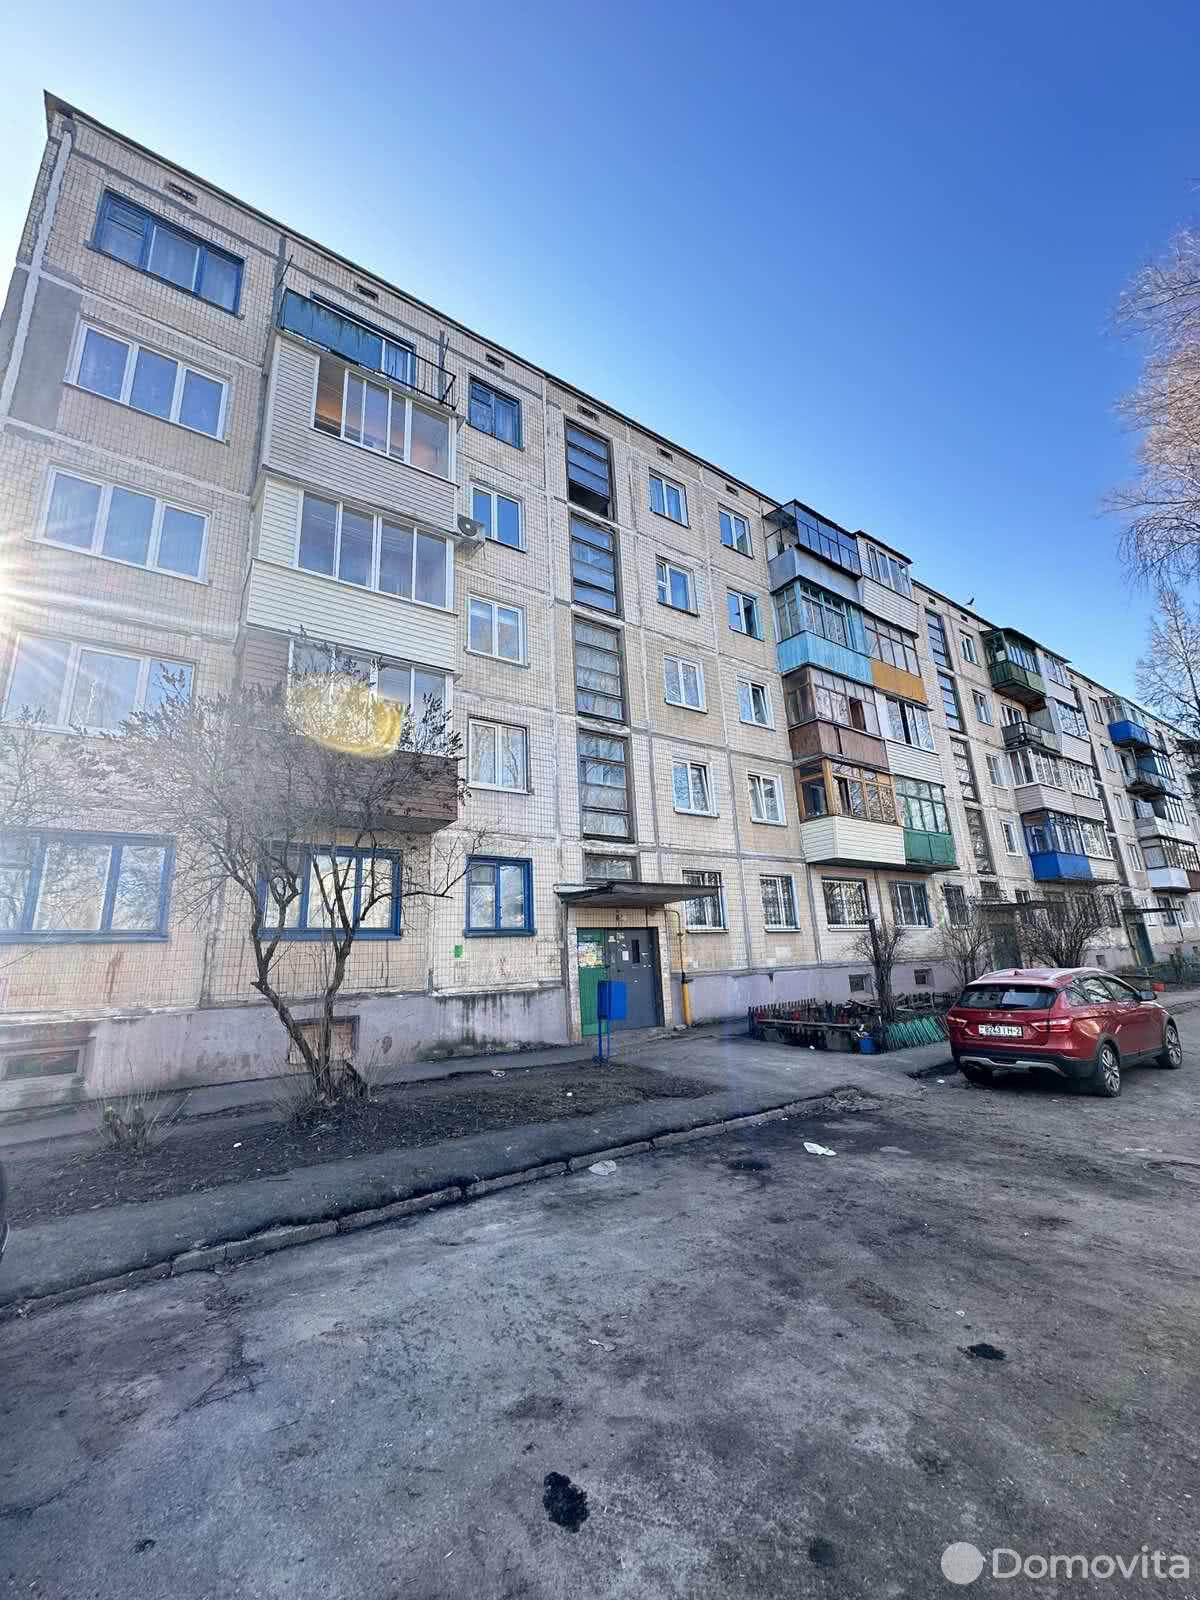 квартира, Витебск, ул. Вострецова, д. 9/2, стоимость продажи 102 953 р.